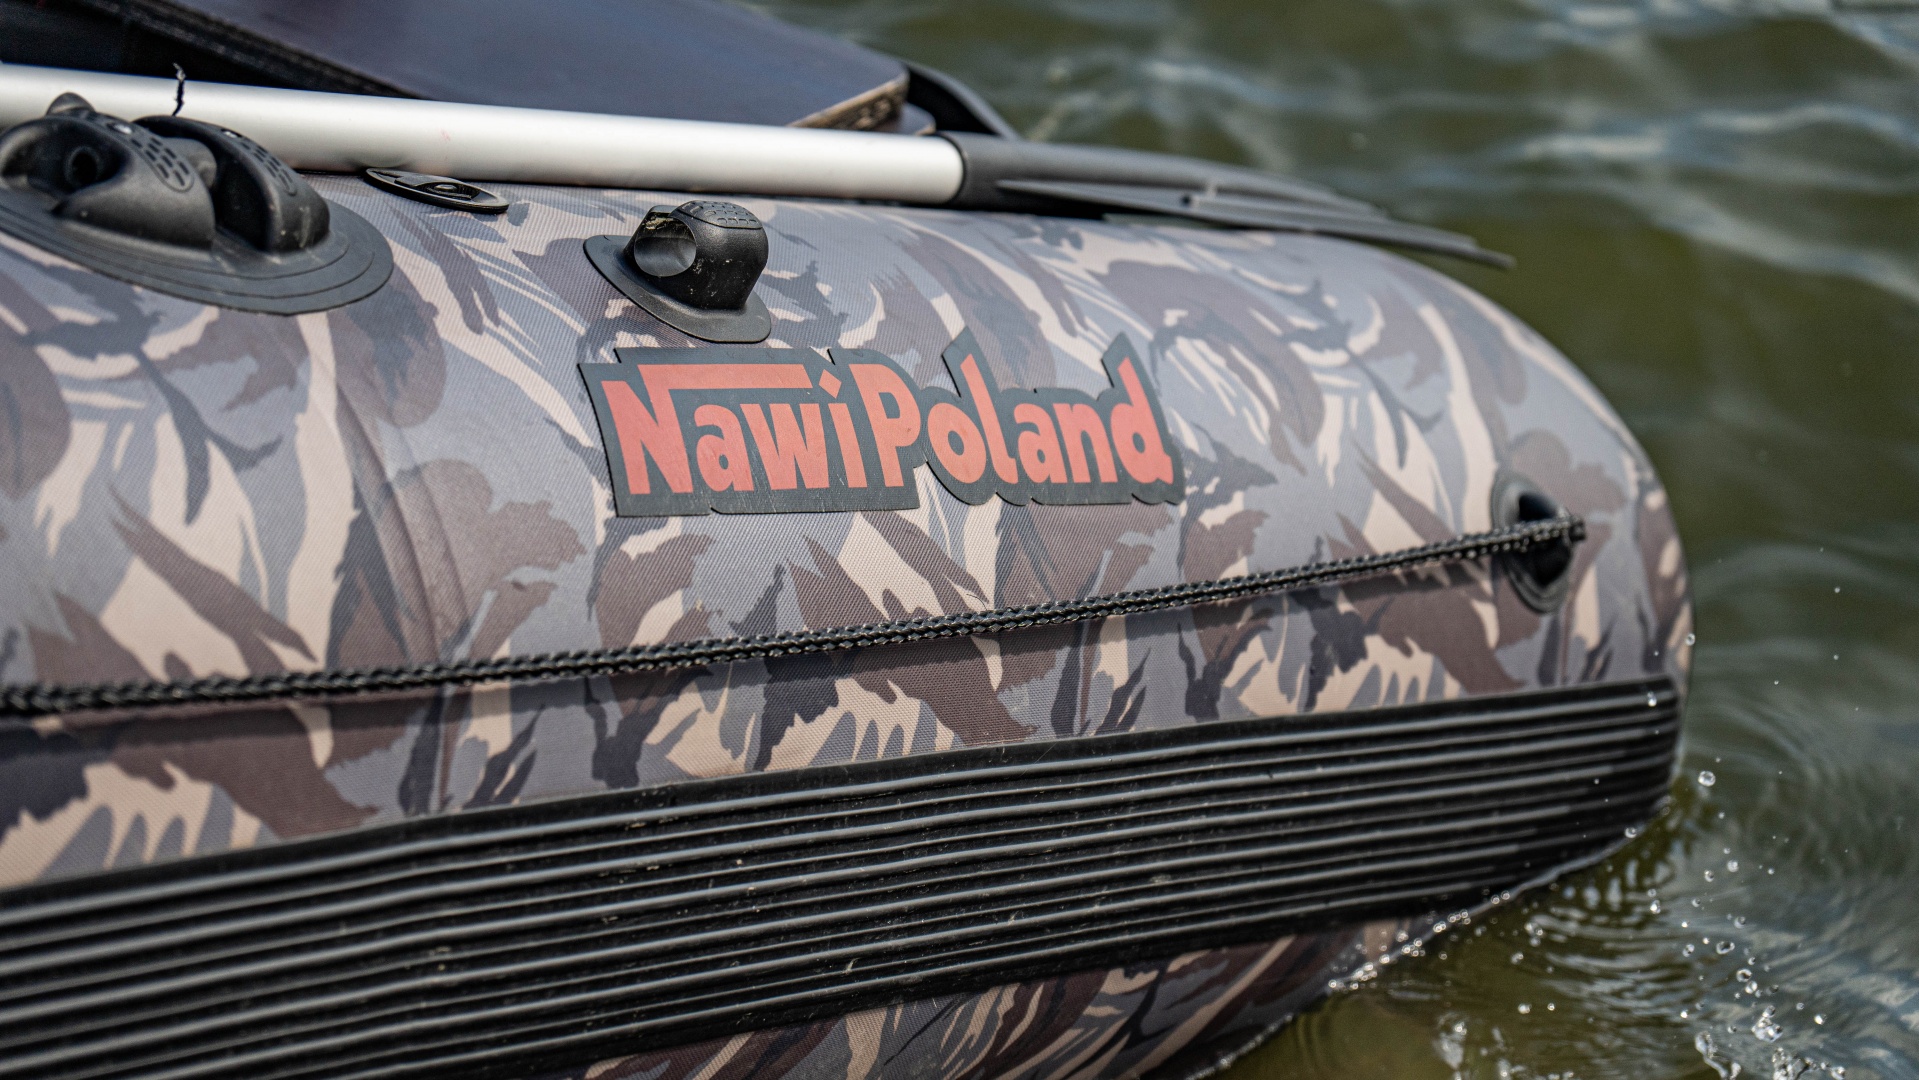 NawiPoland CAT 300 Inflatable Boat  - Catamaran